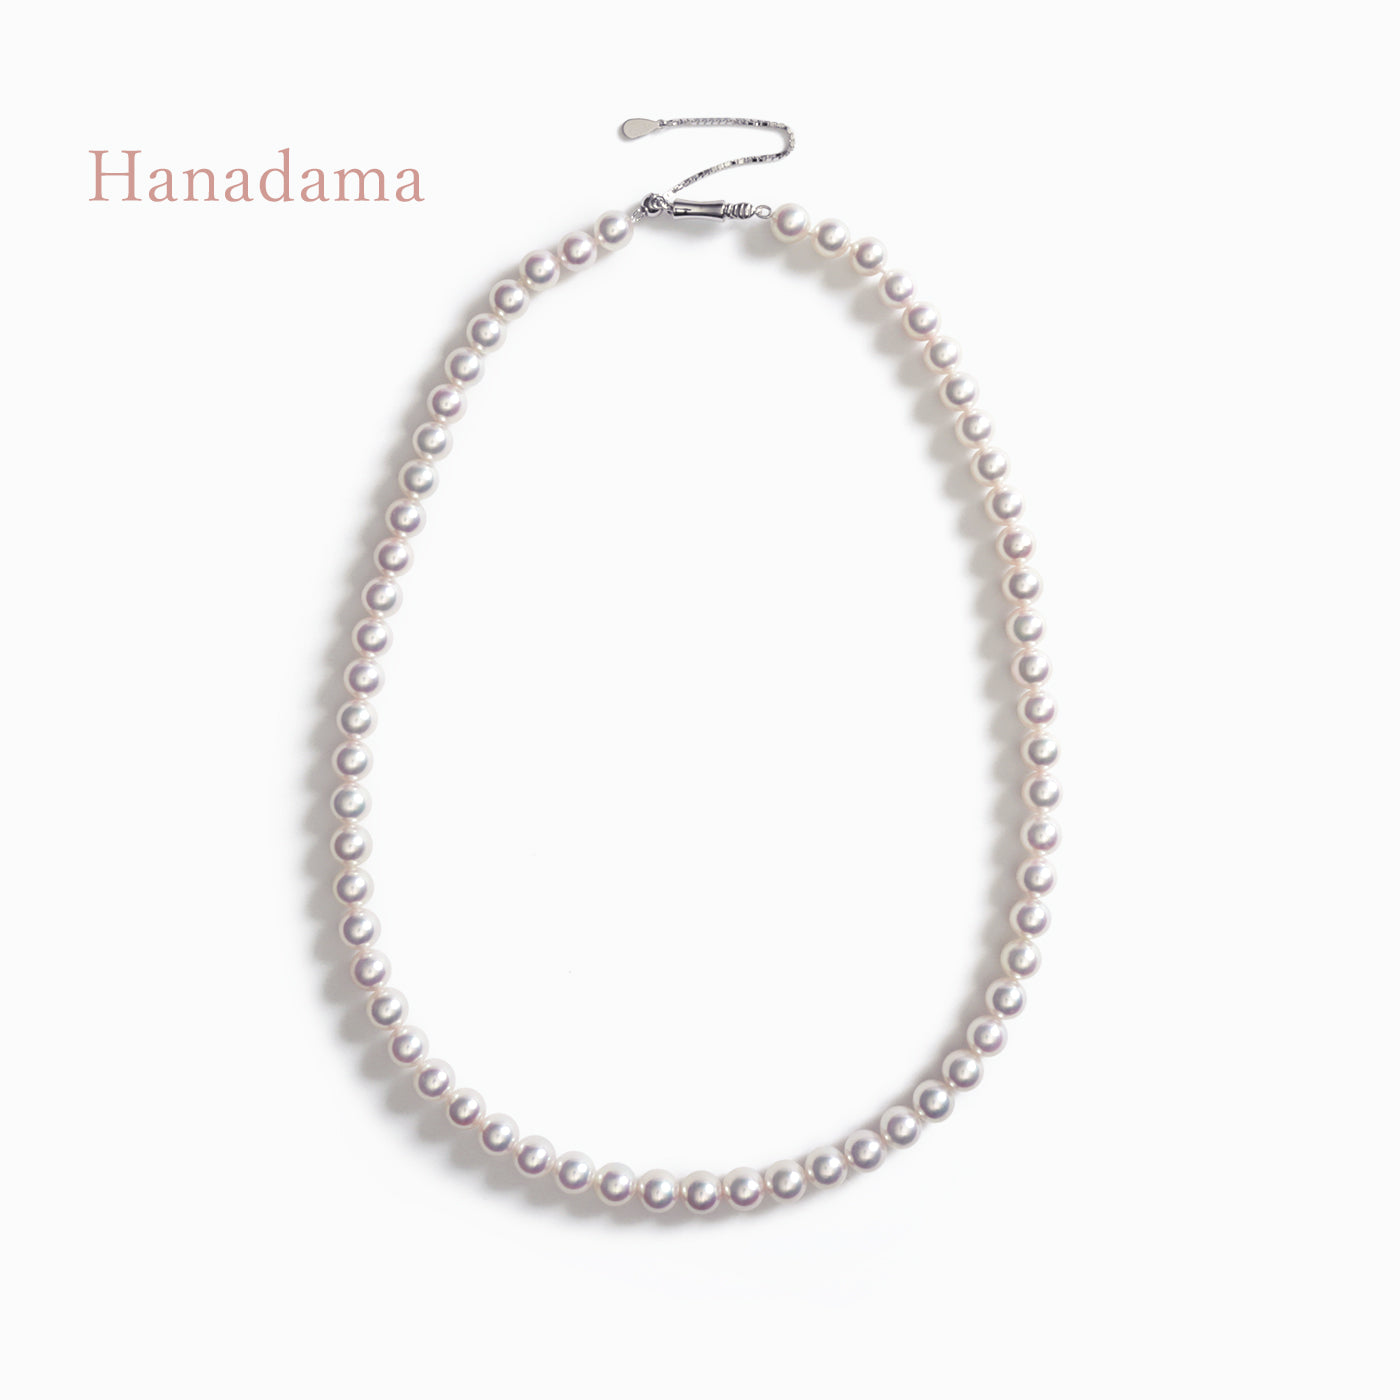 6.5-7.0mm "Hanadama" Akoya Pearl Necklace